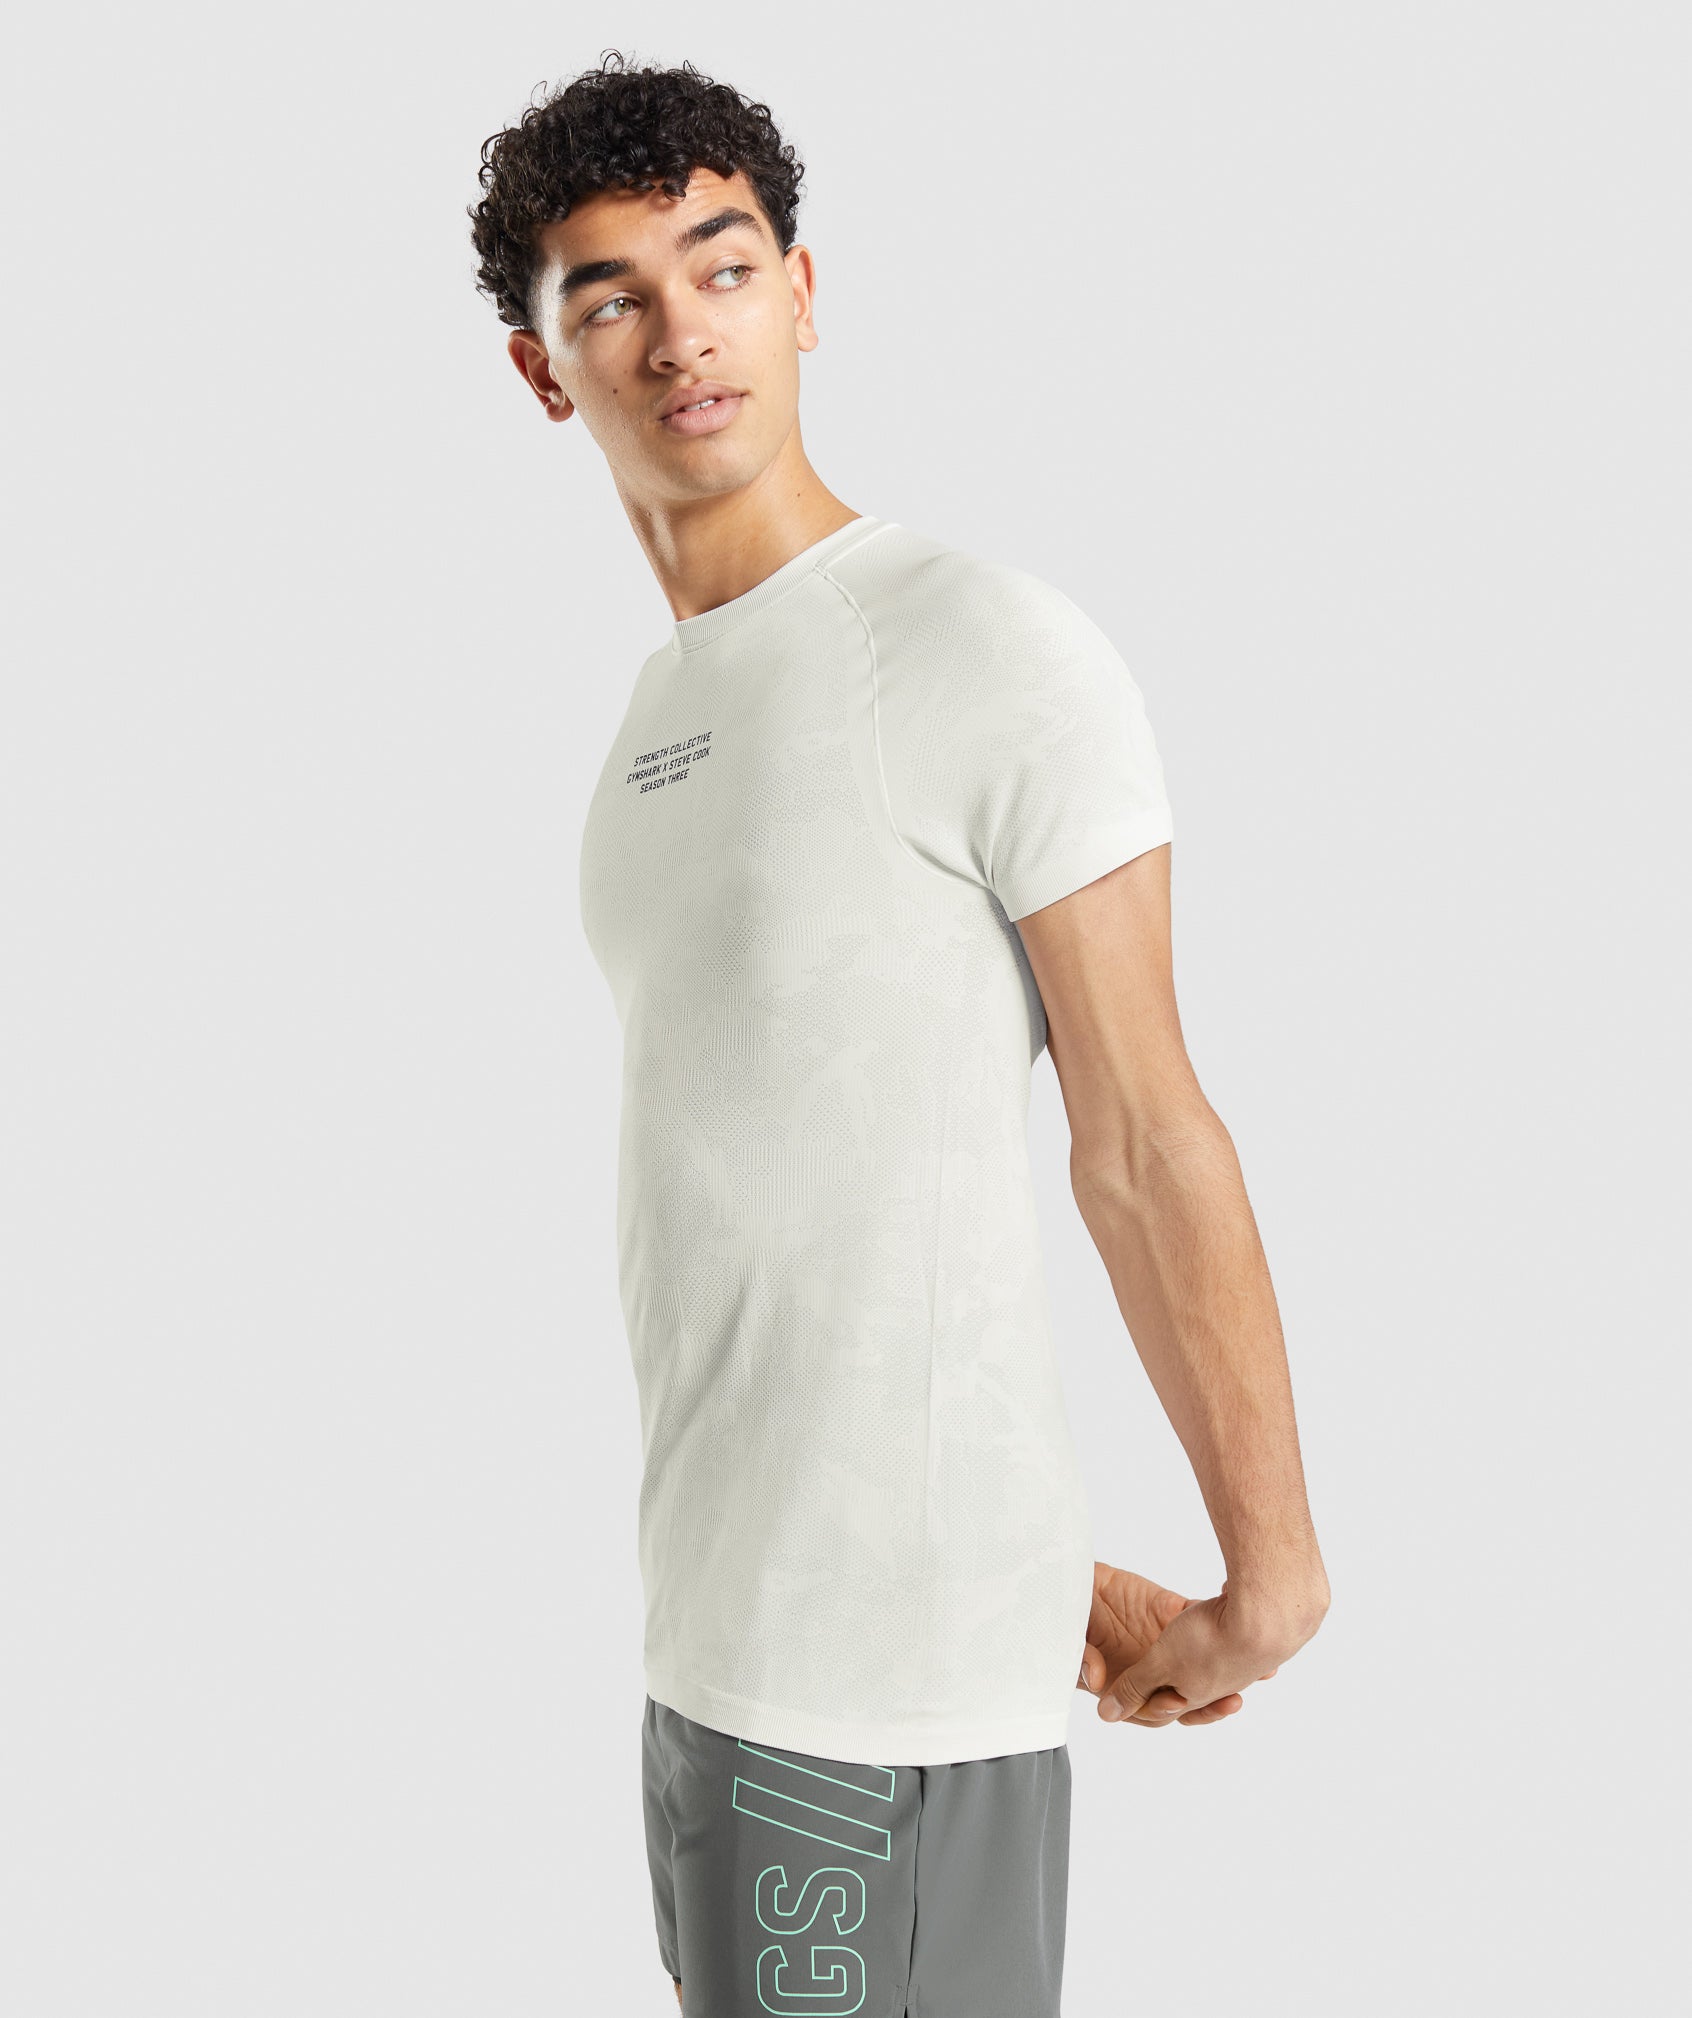 Gymshark//Steve Cook Seamless T-Shirt in Off White/Light Grey - view 3